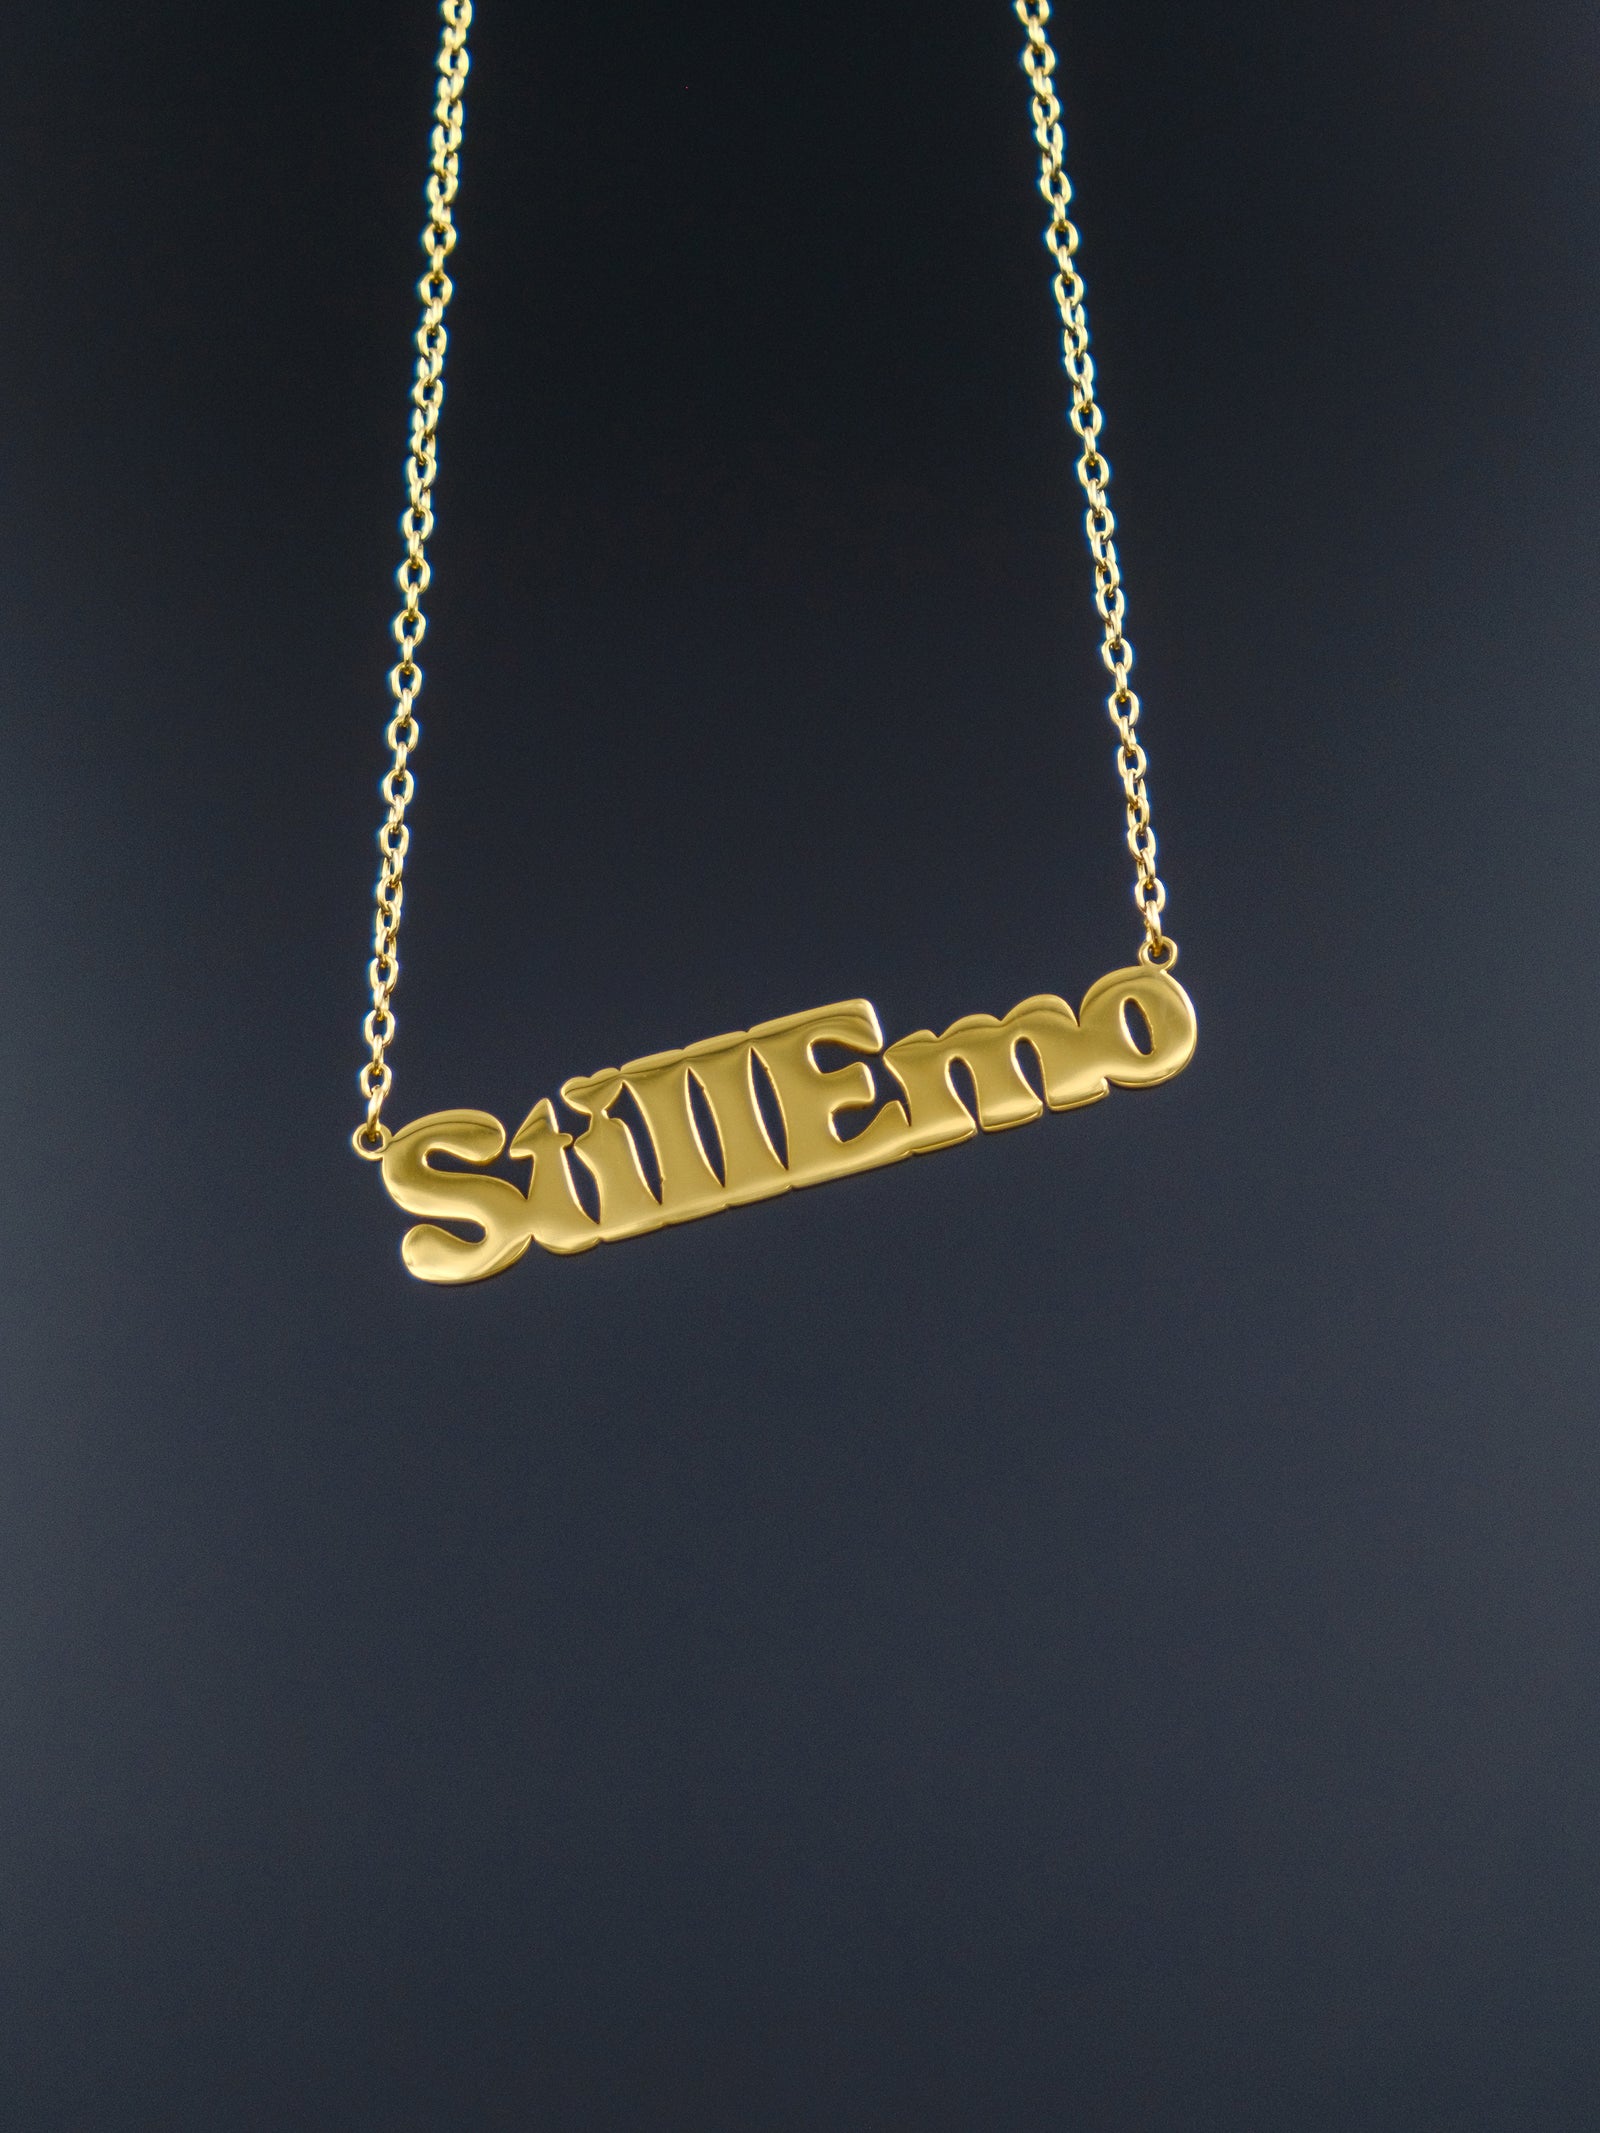 Still Emo Nameplate Necklace